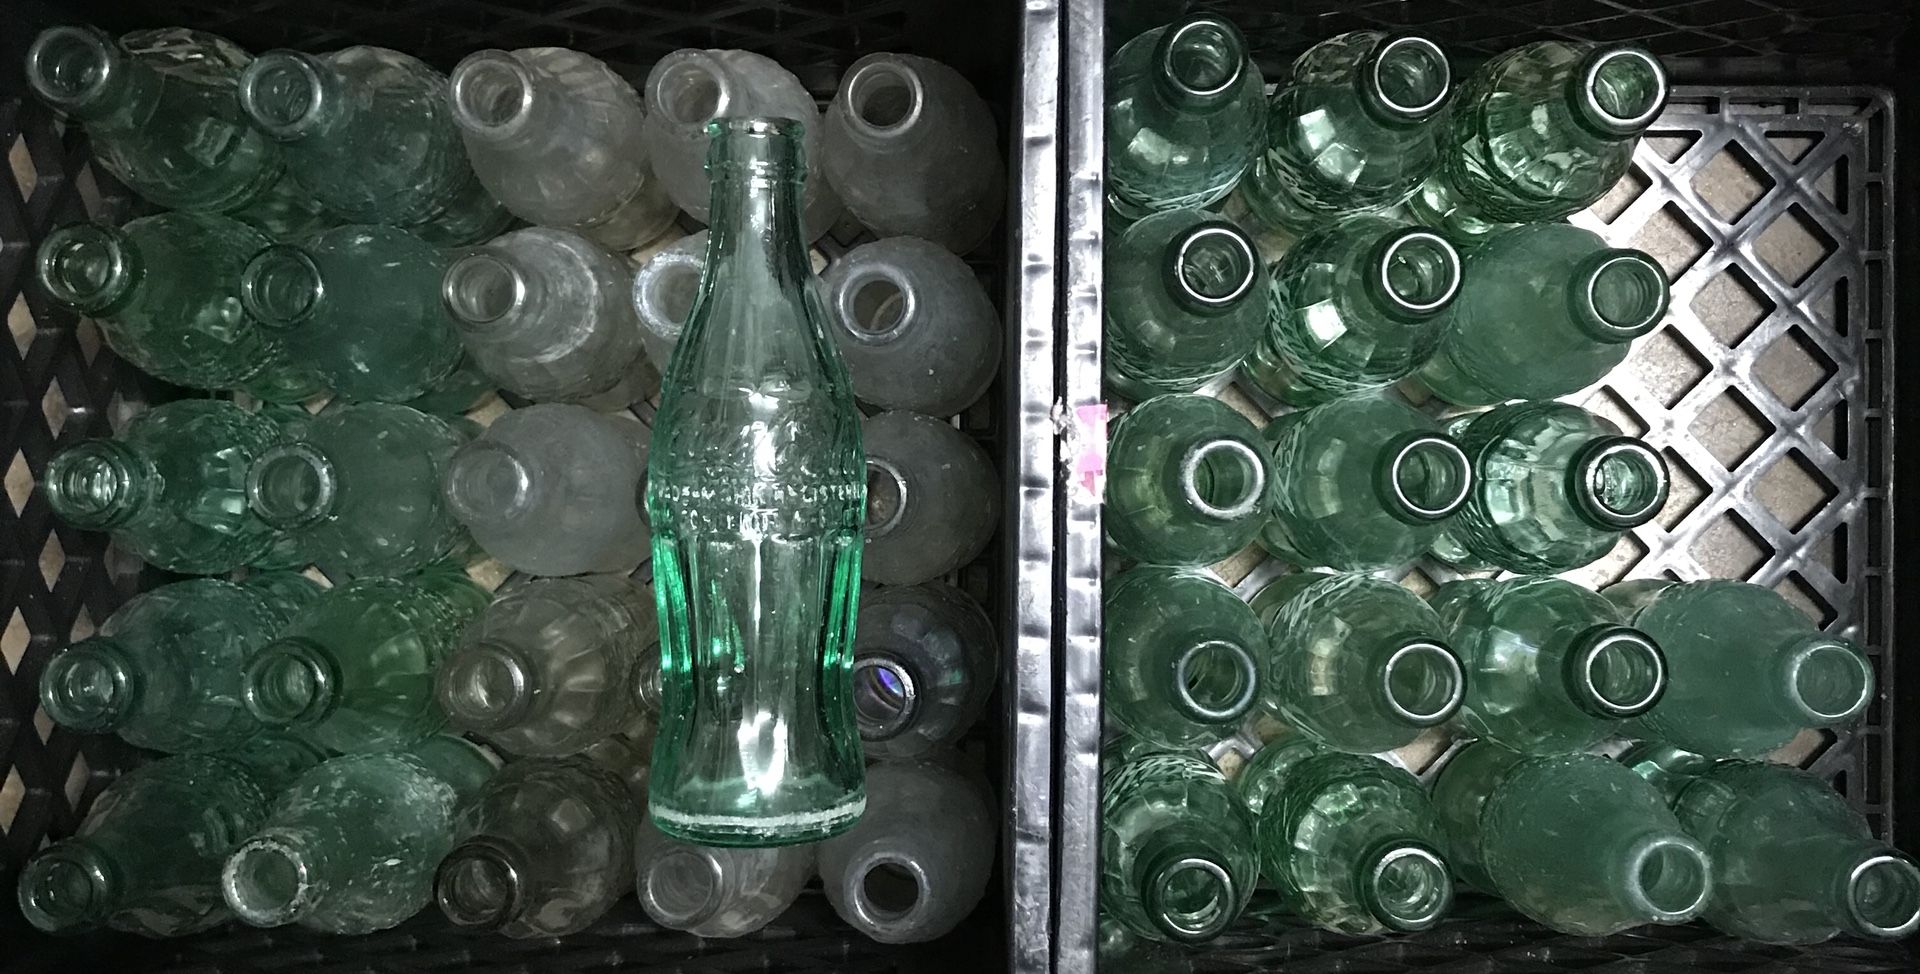 43 old Coca Cola soda bottles